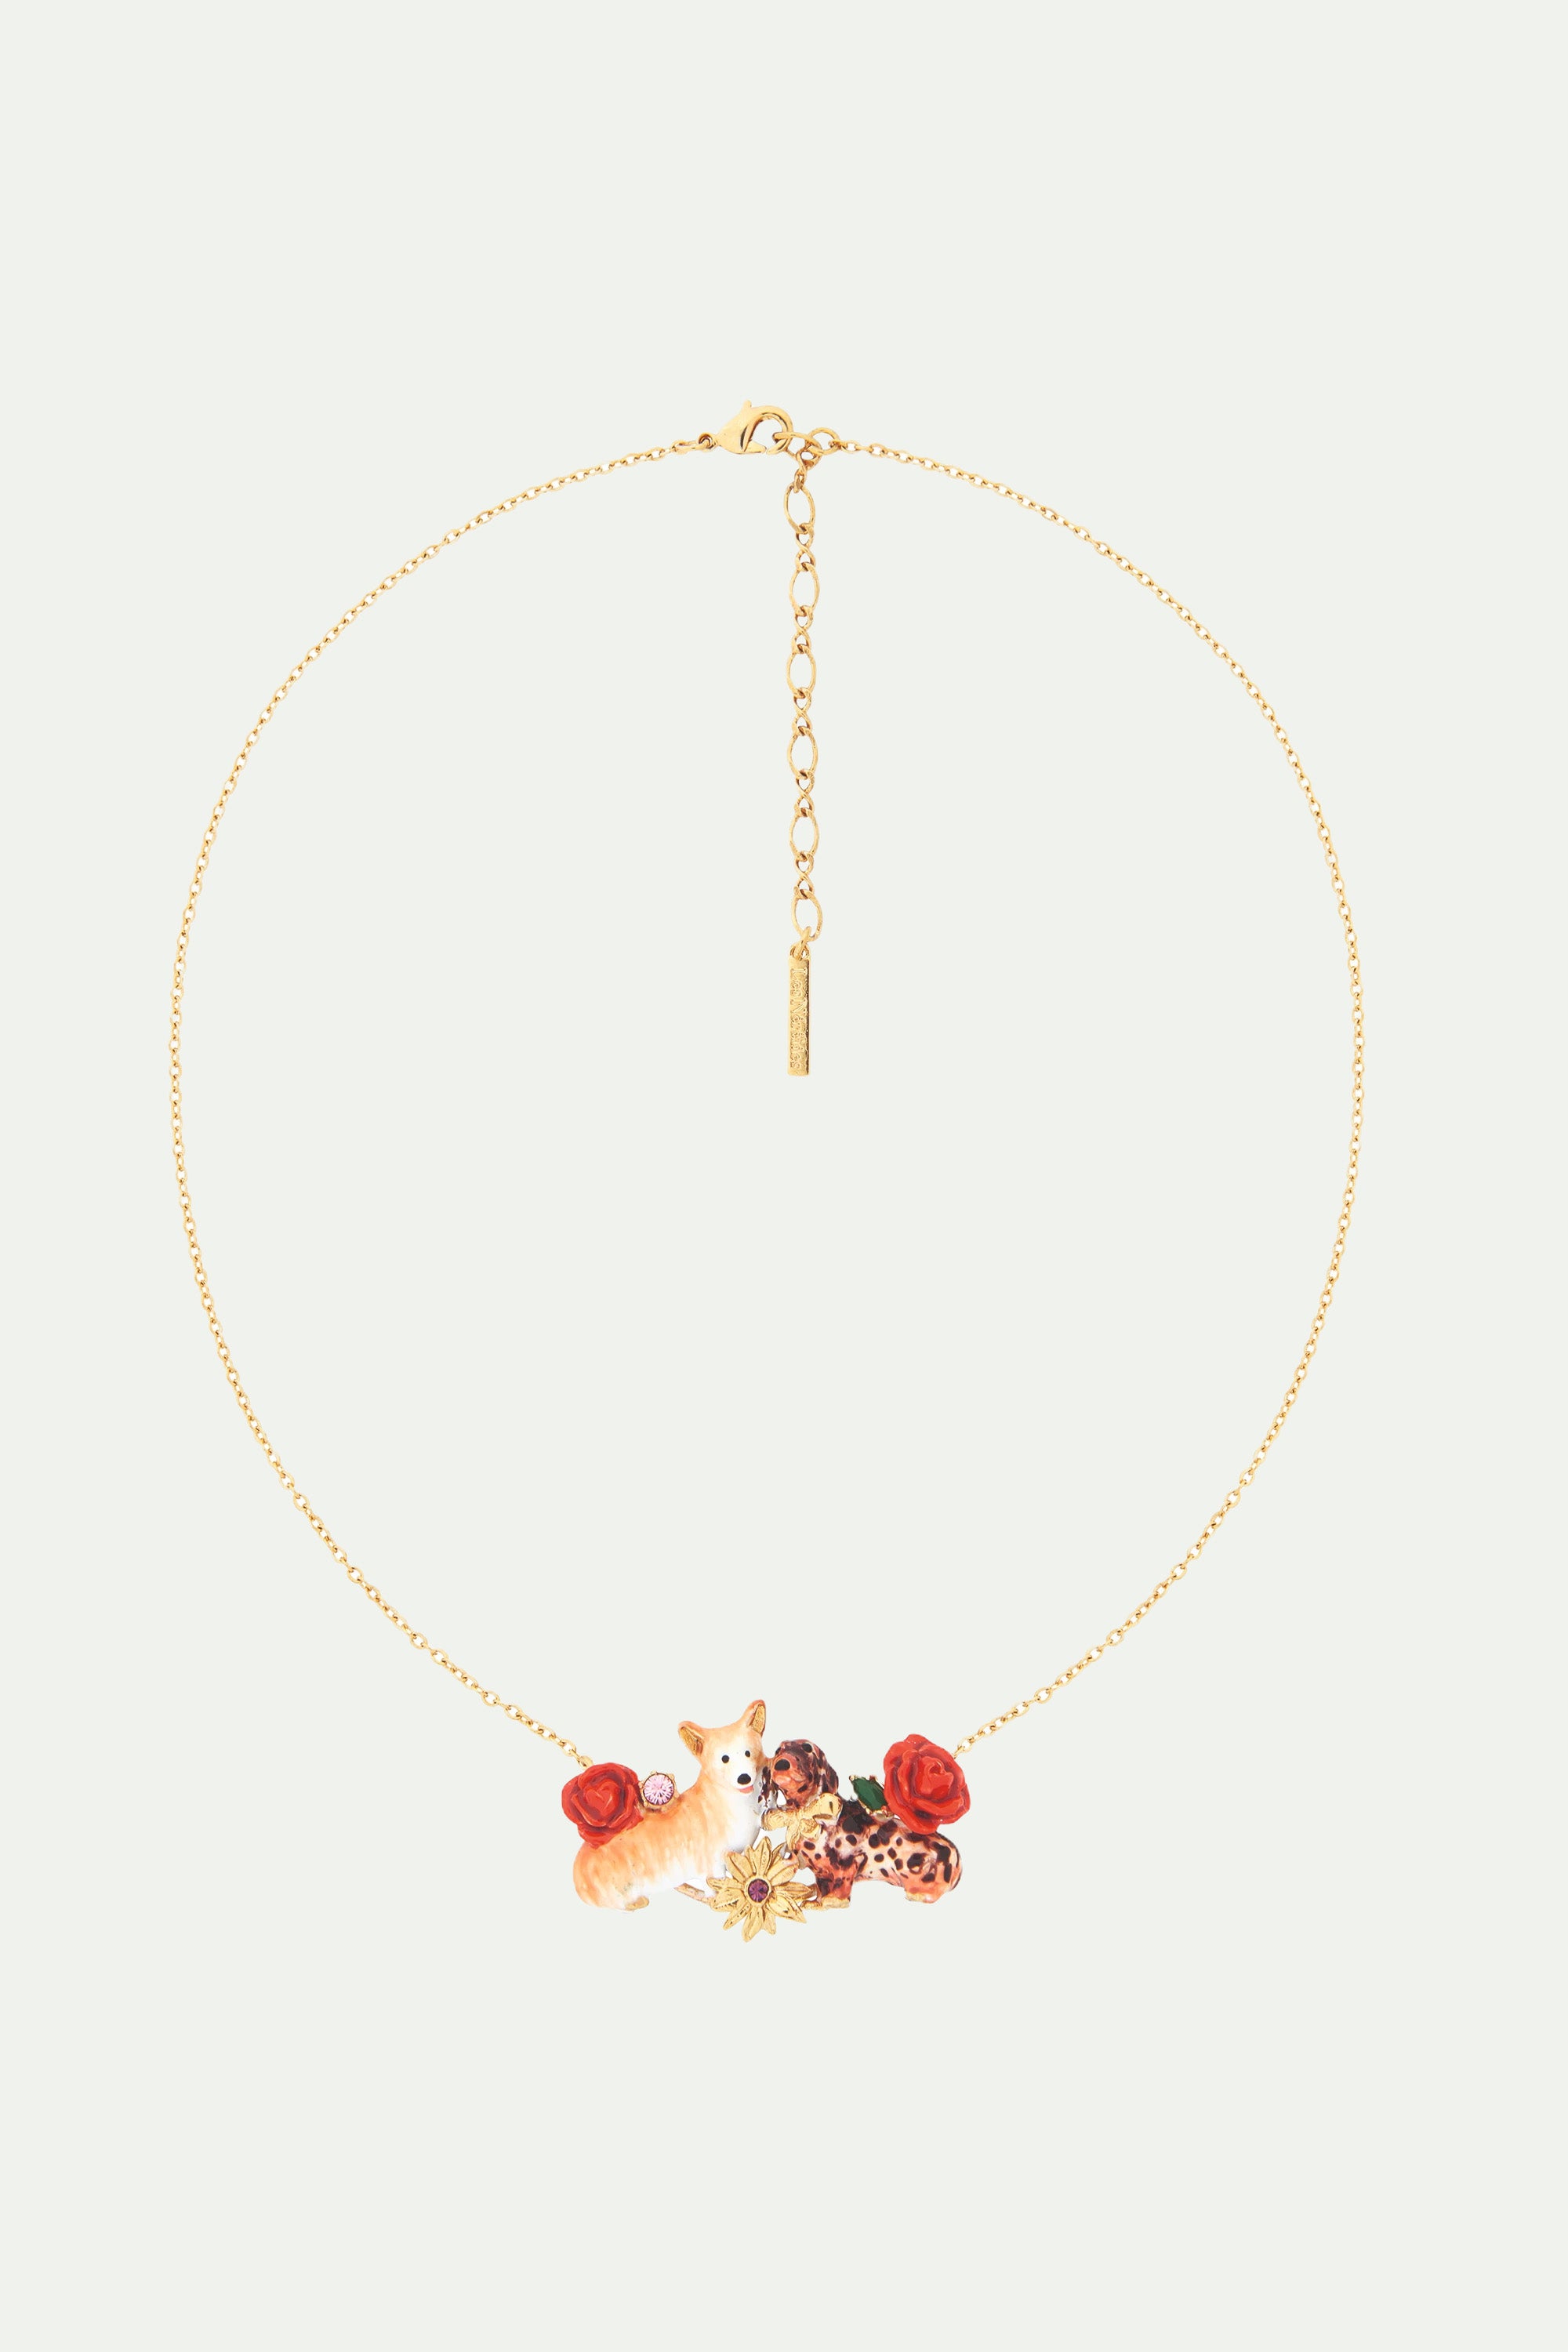 Corgi, dachshund and flower statement necklace